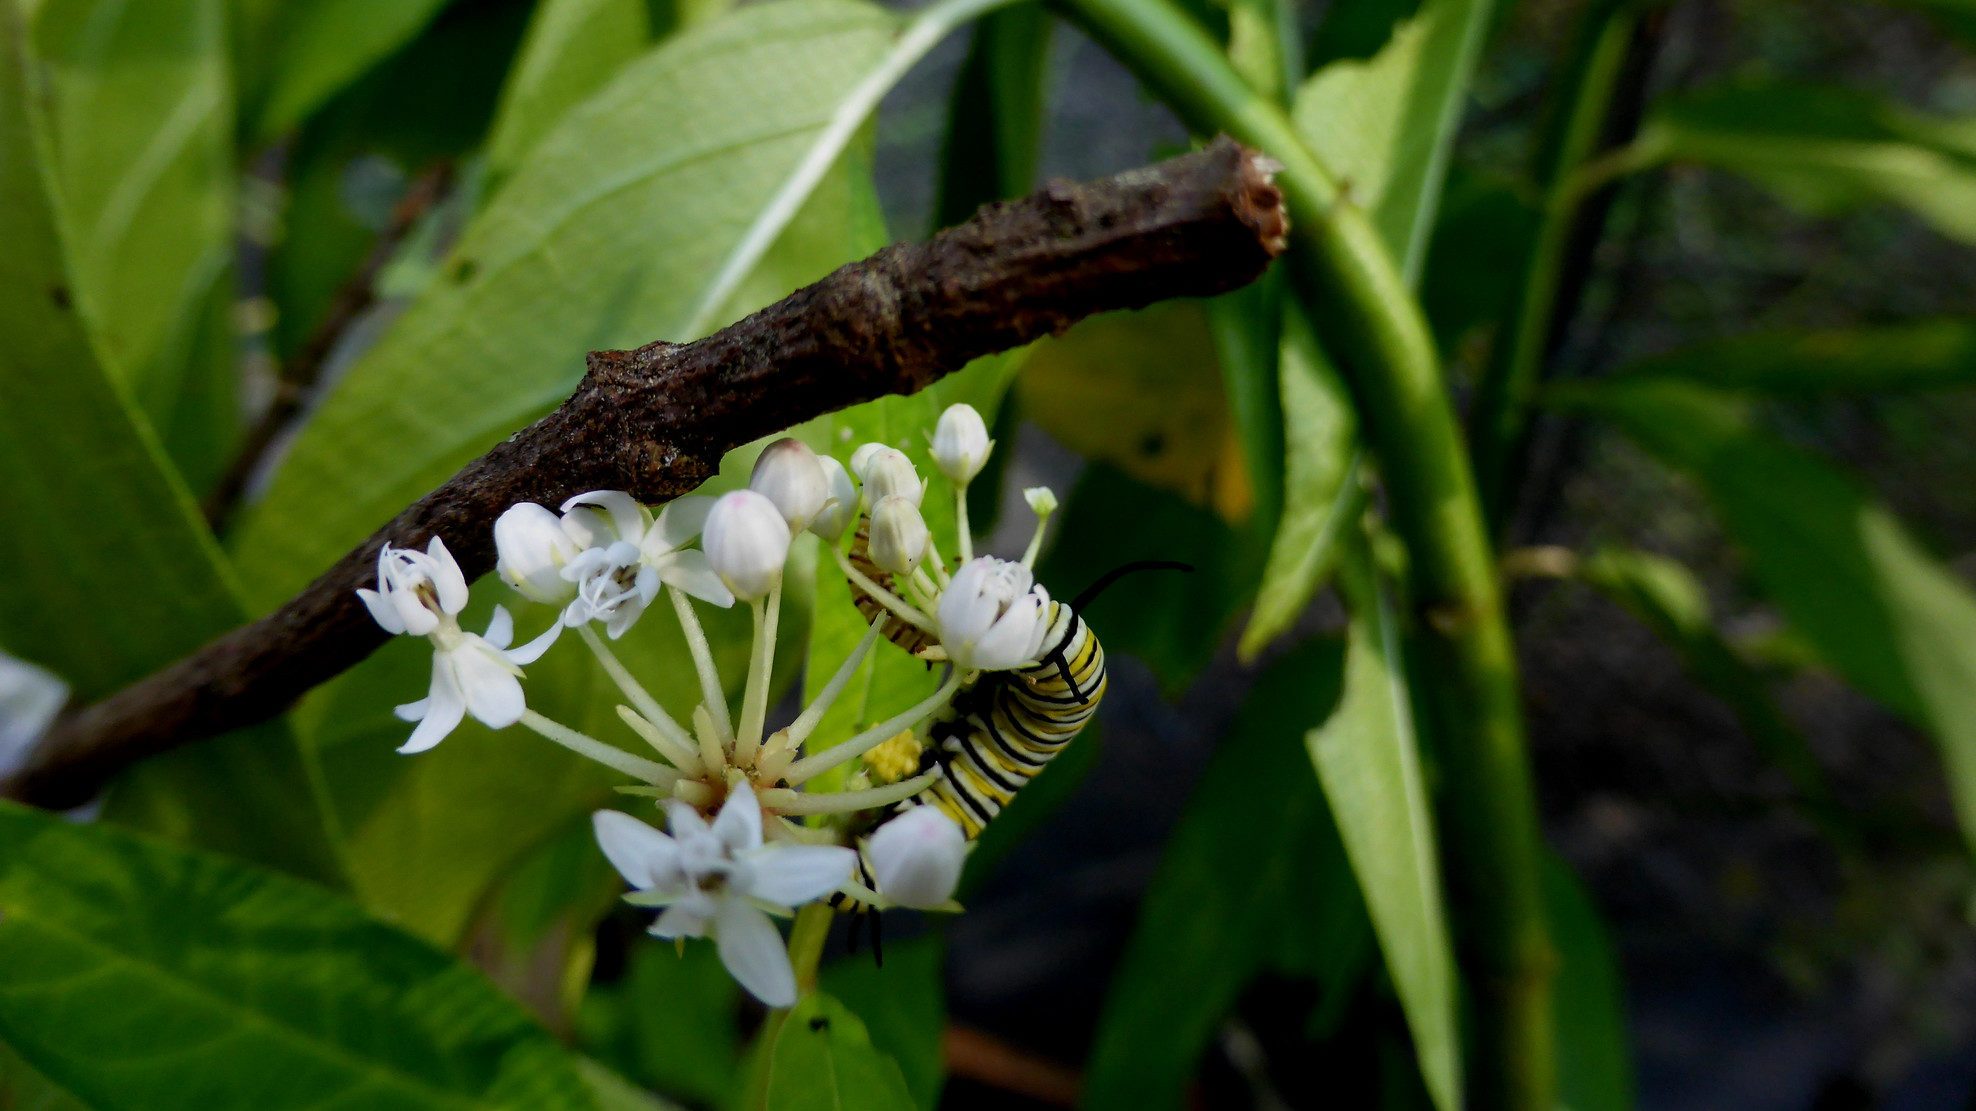 Monarch caterpillars on the White swamp milkweed (Asclepias perennis) flower.